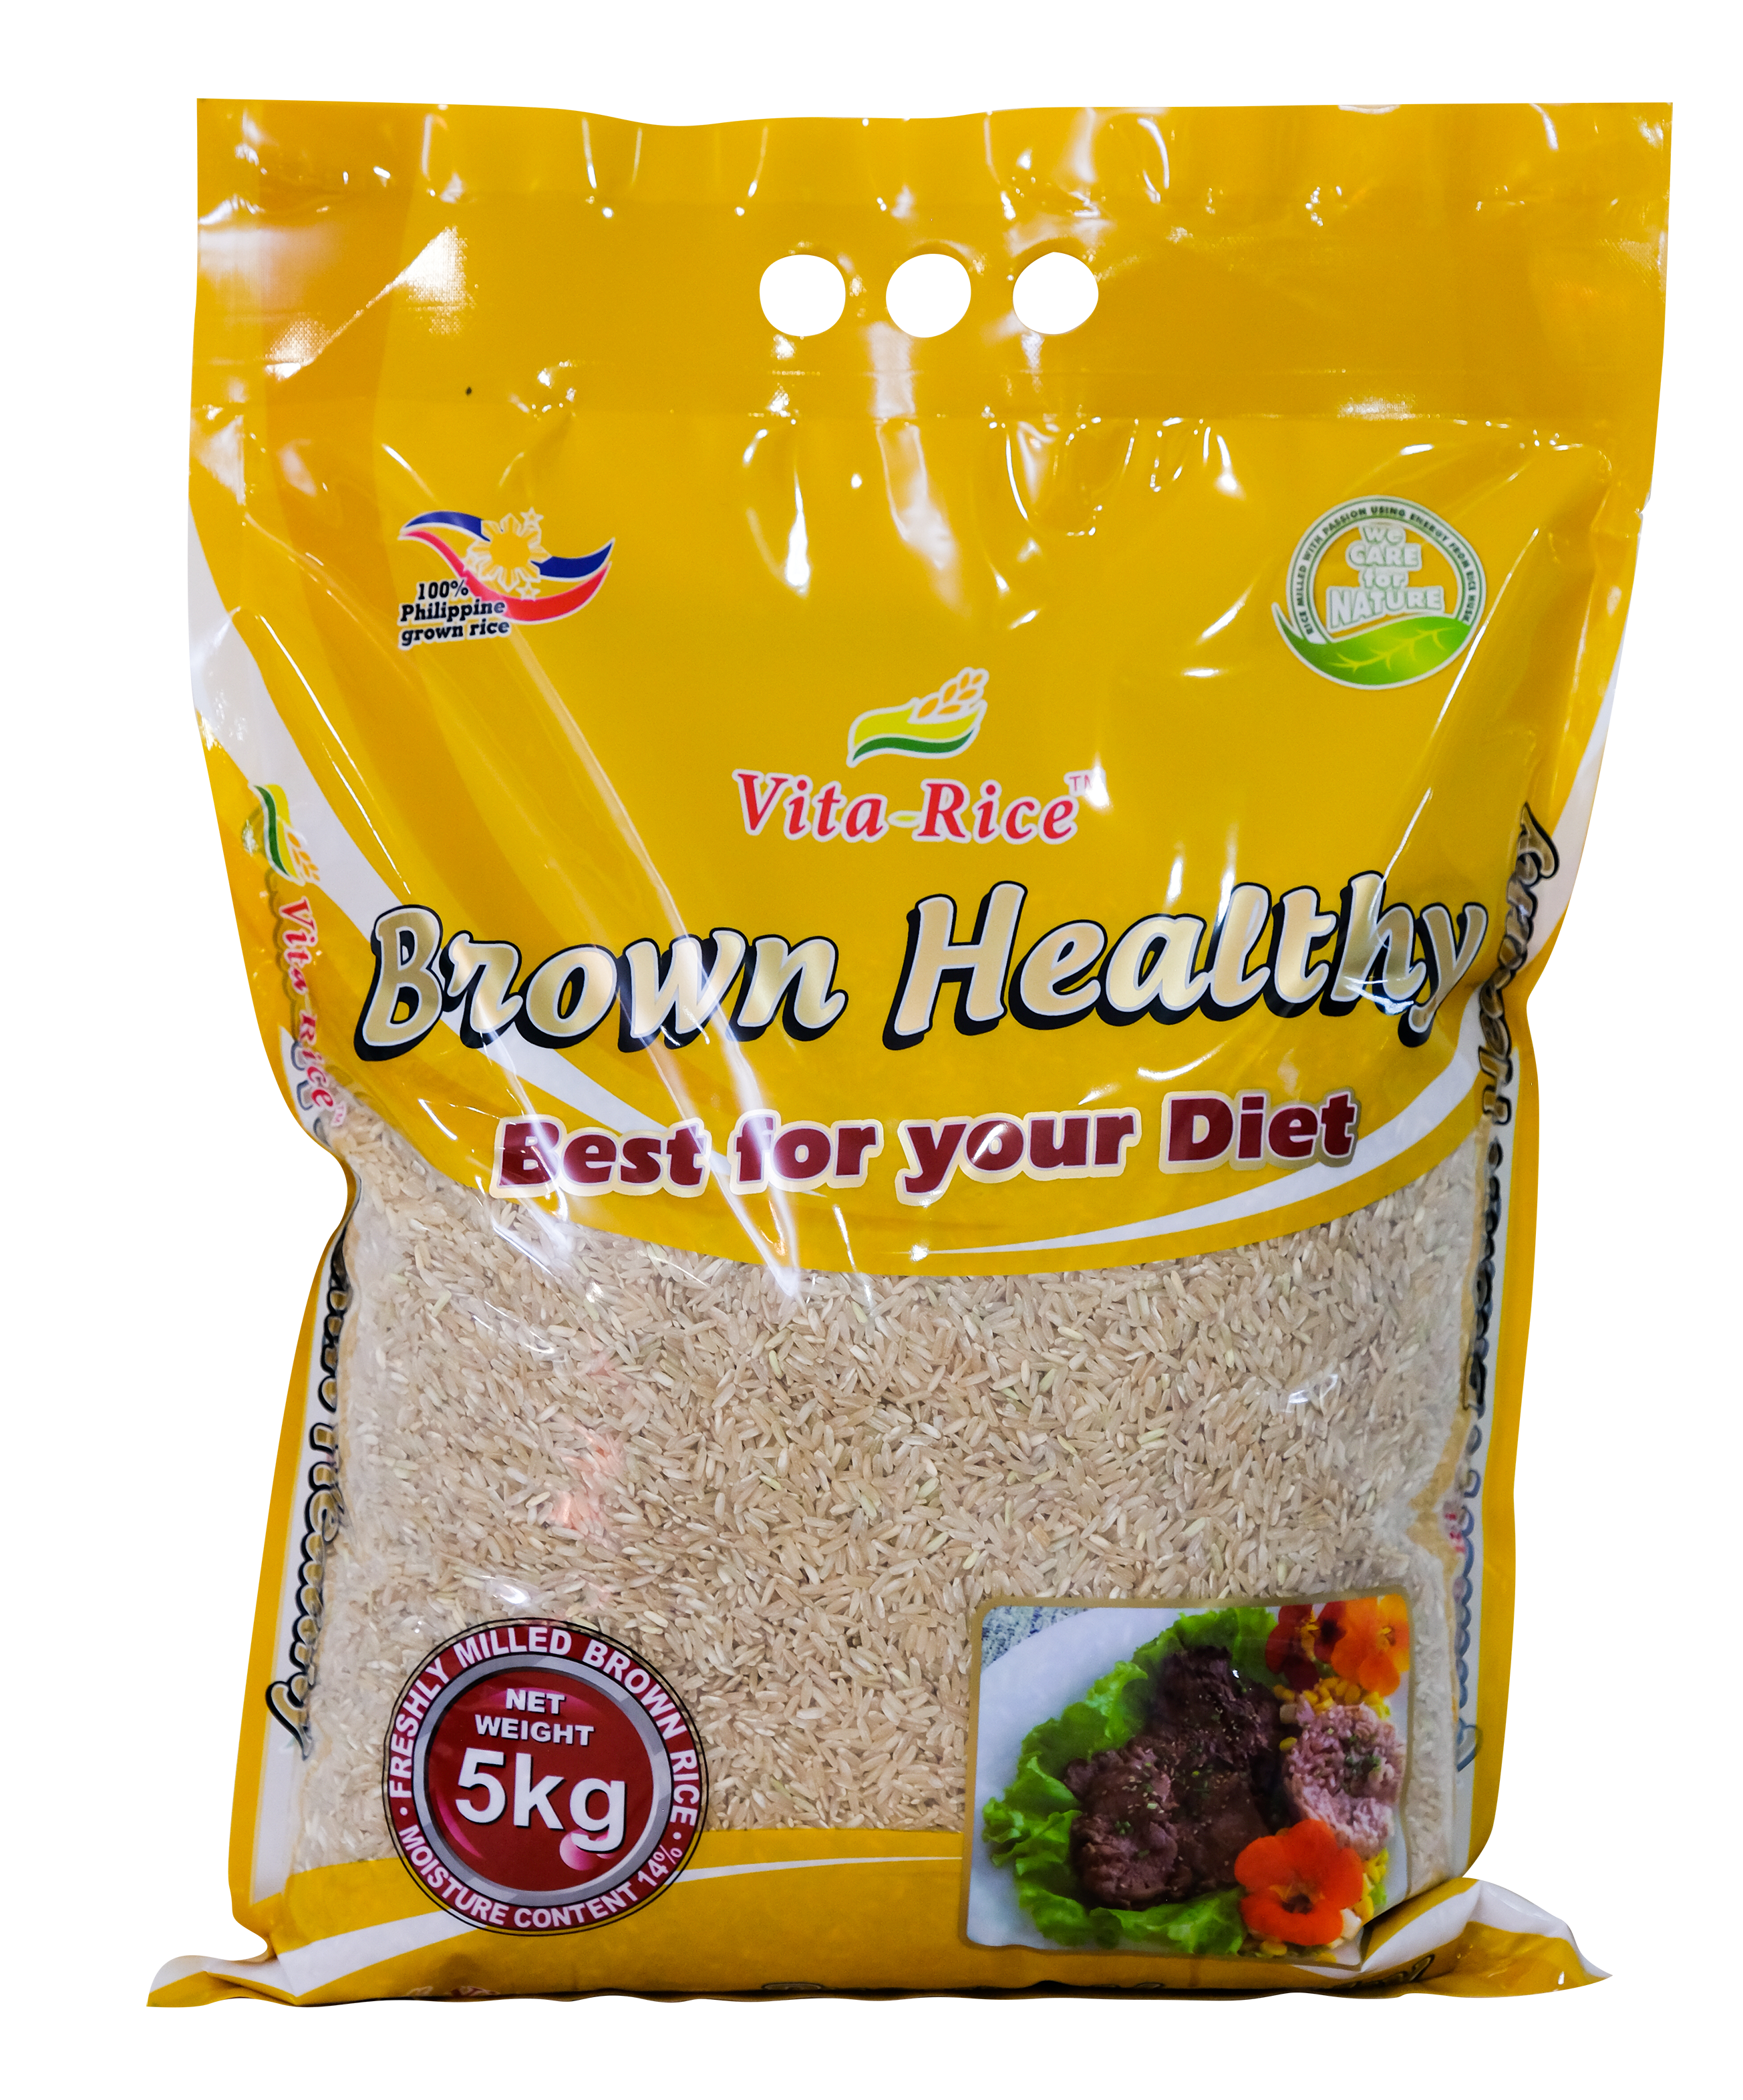 Vita-Rice Brown Healthy